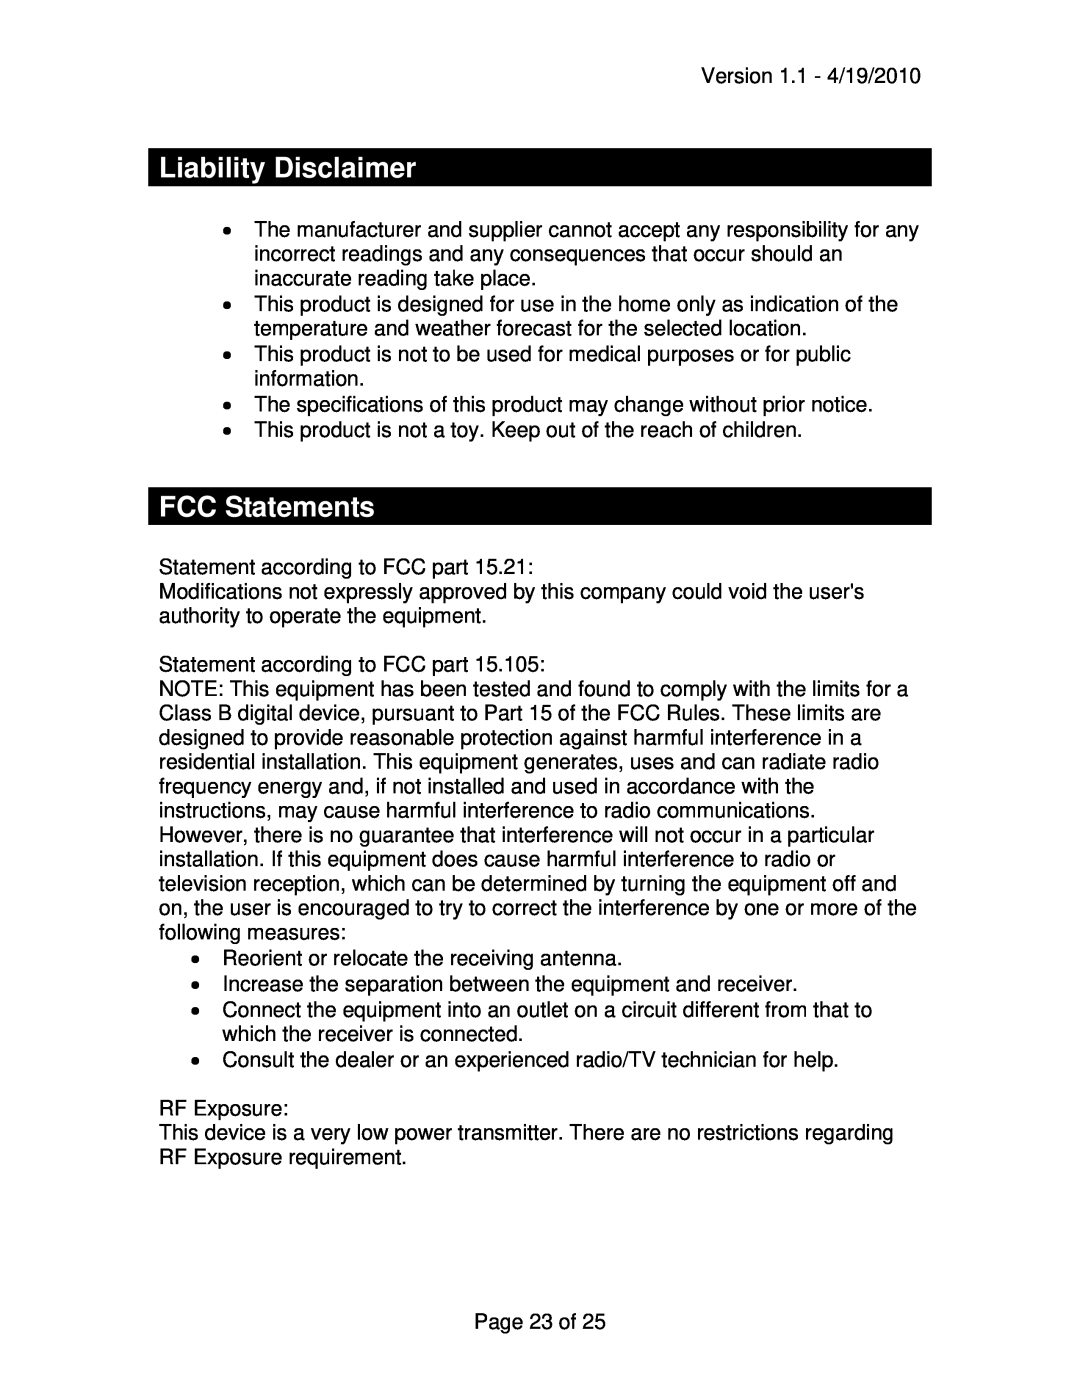 La Crosse Technology WD-9535 owner manual Liability Disclaimer, FCC Statements 